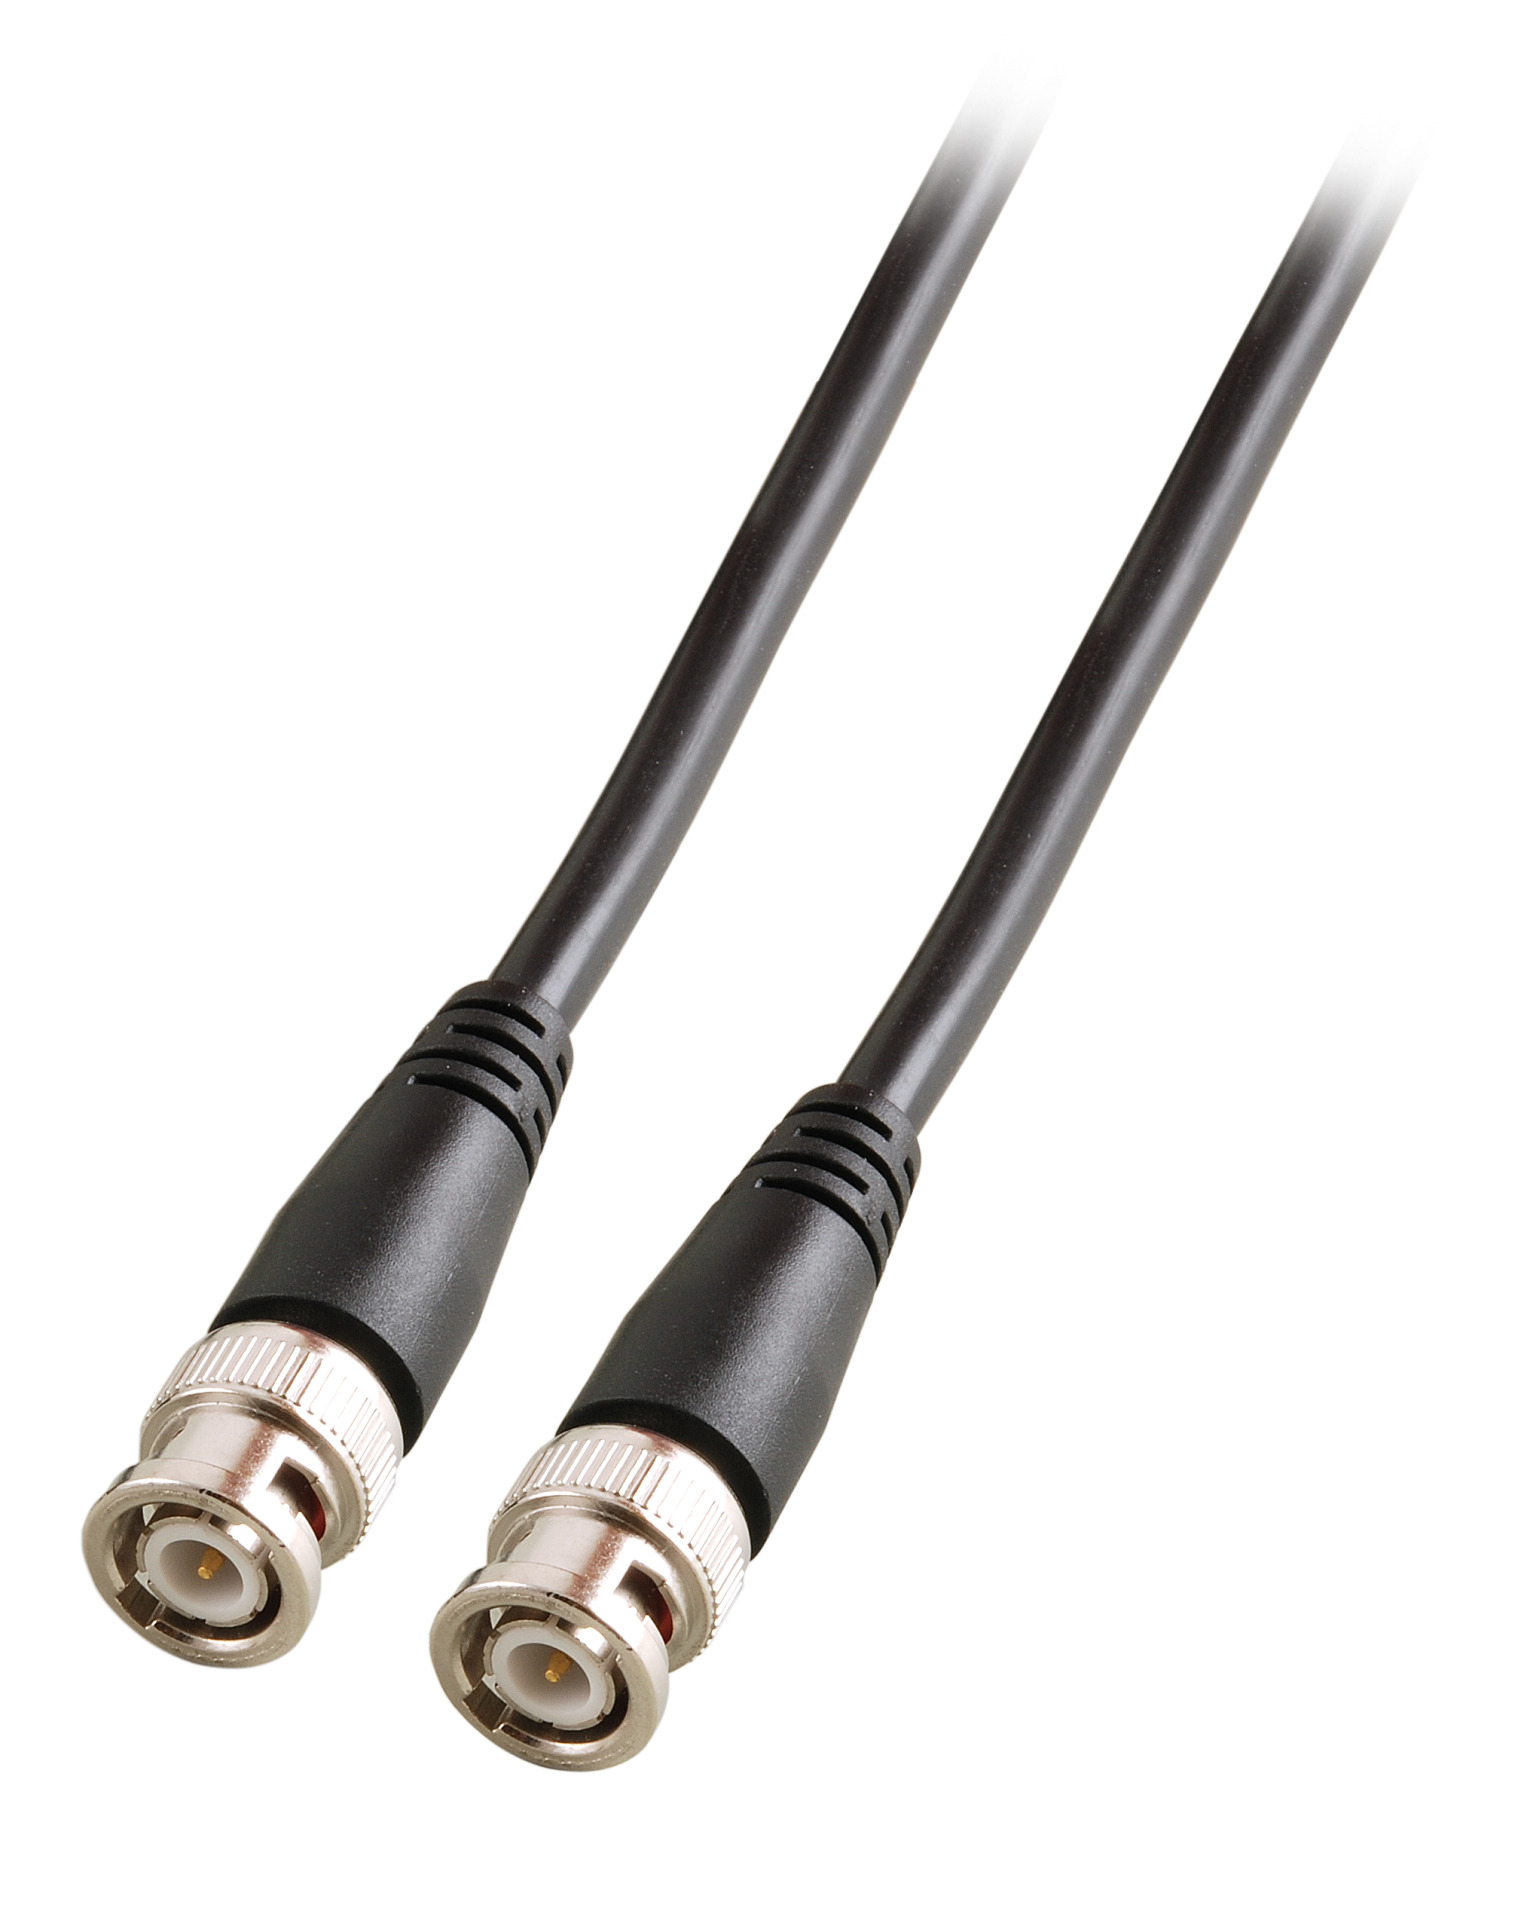 Koax-Kabel RG59 C/U 75Ohm,2 x Stecker gerade, 1,0m